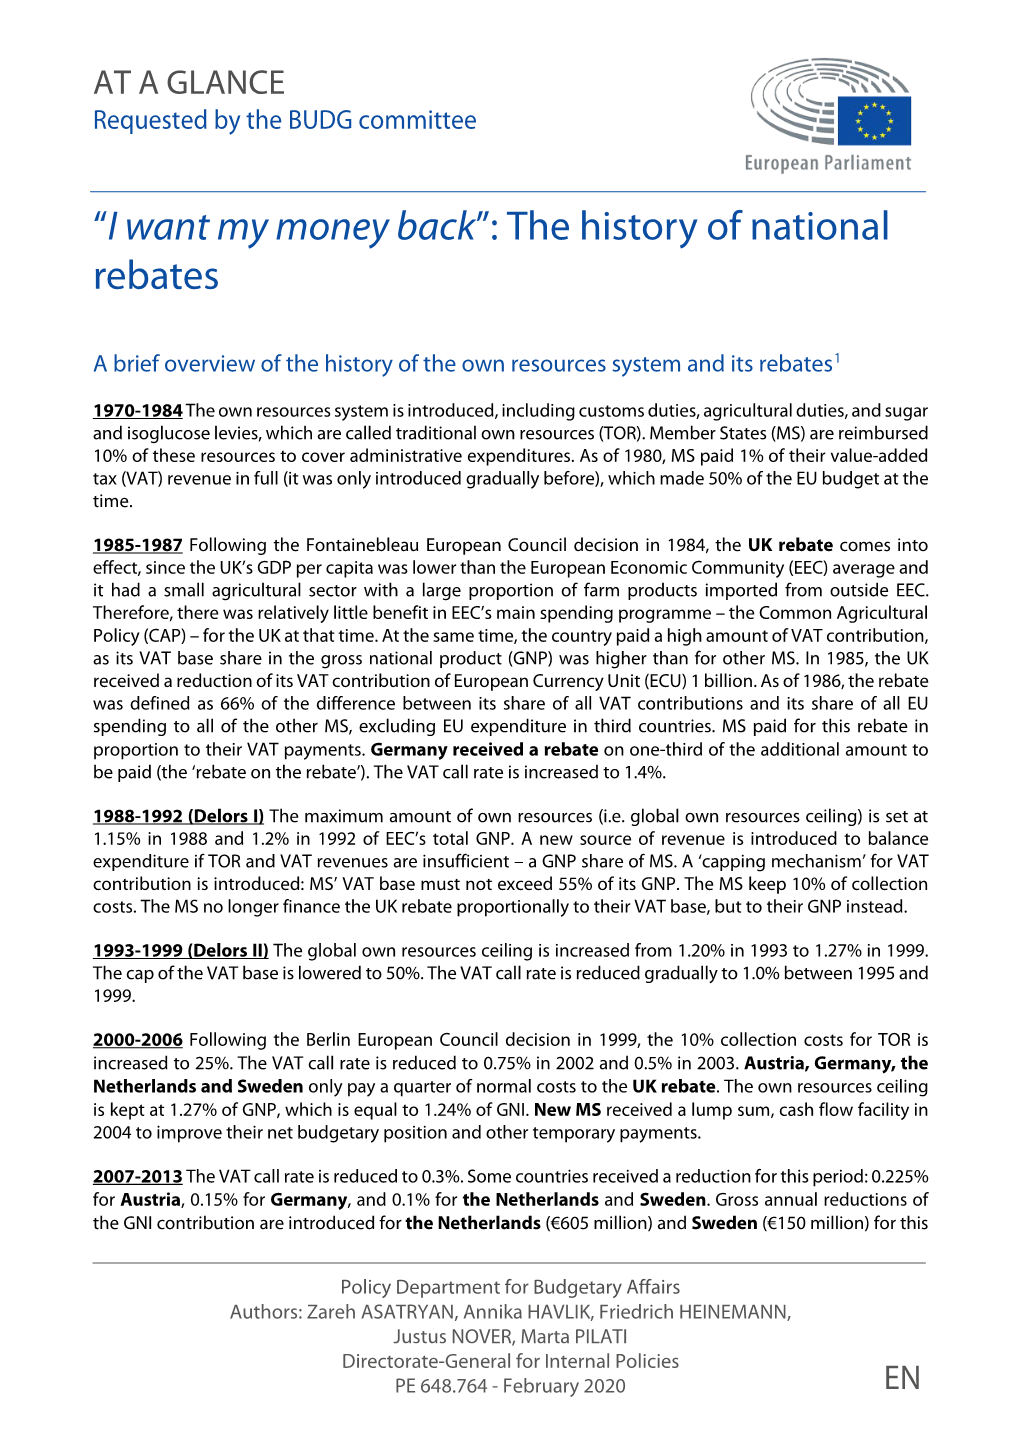 I Want My Money Back”: the History of National Rebates